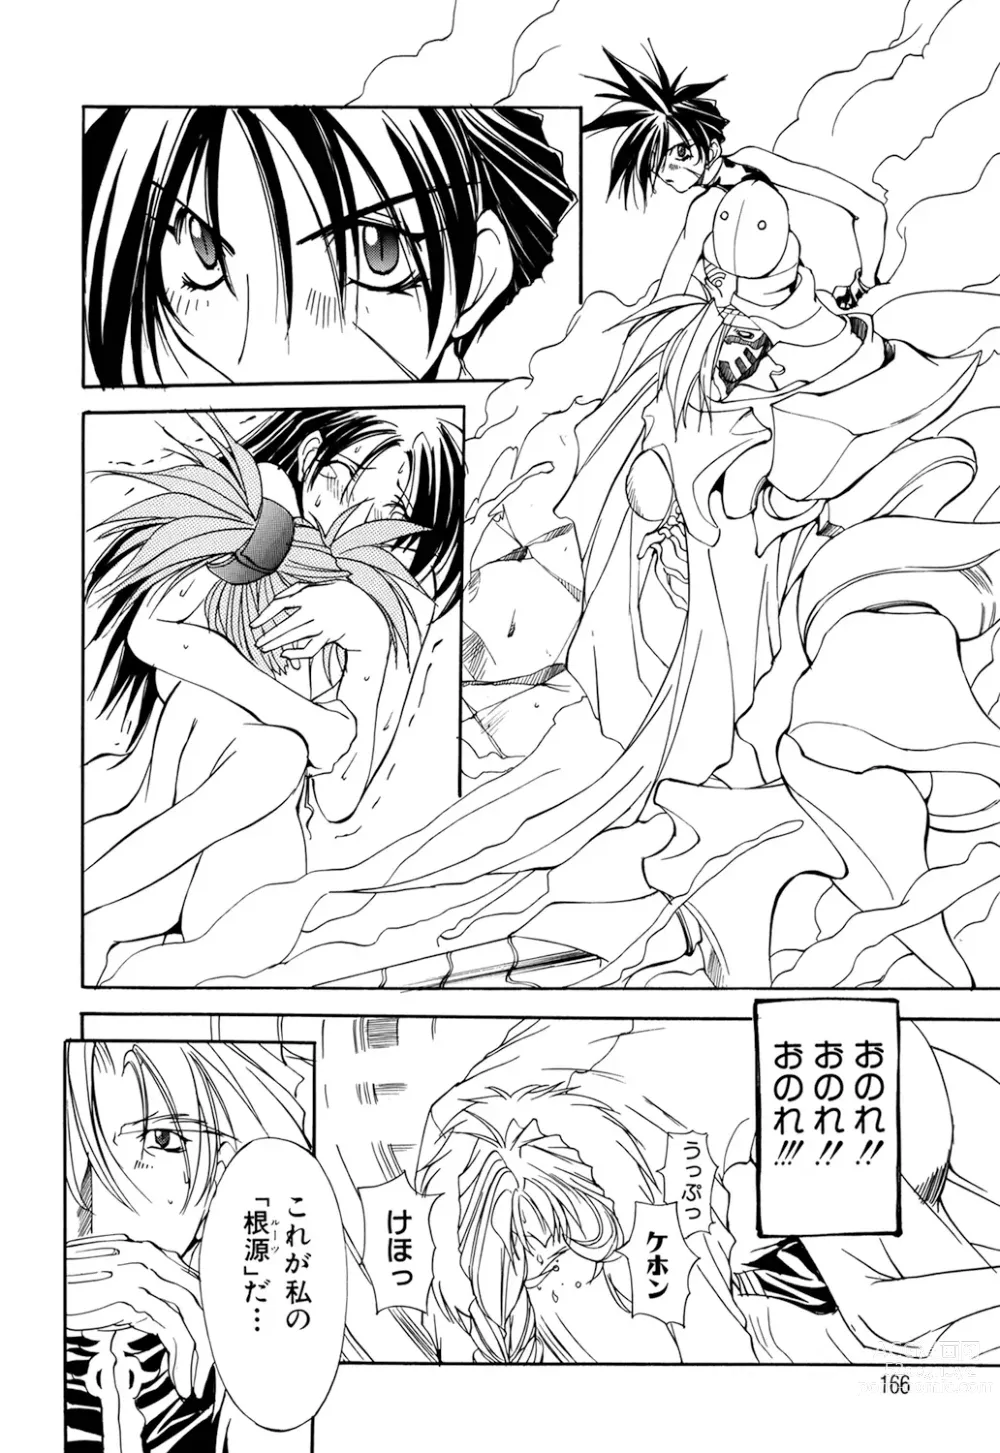 Page 164 of manga Shuukakusai Dainishou - Black Mass